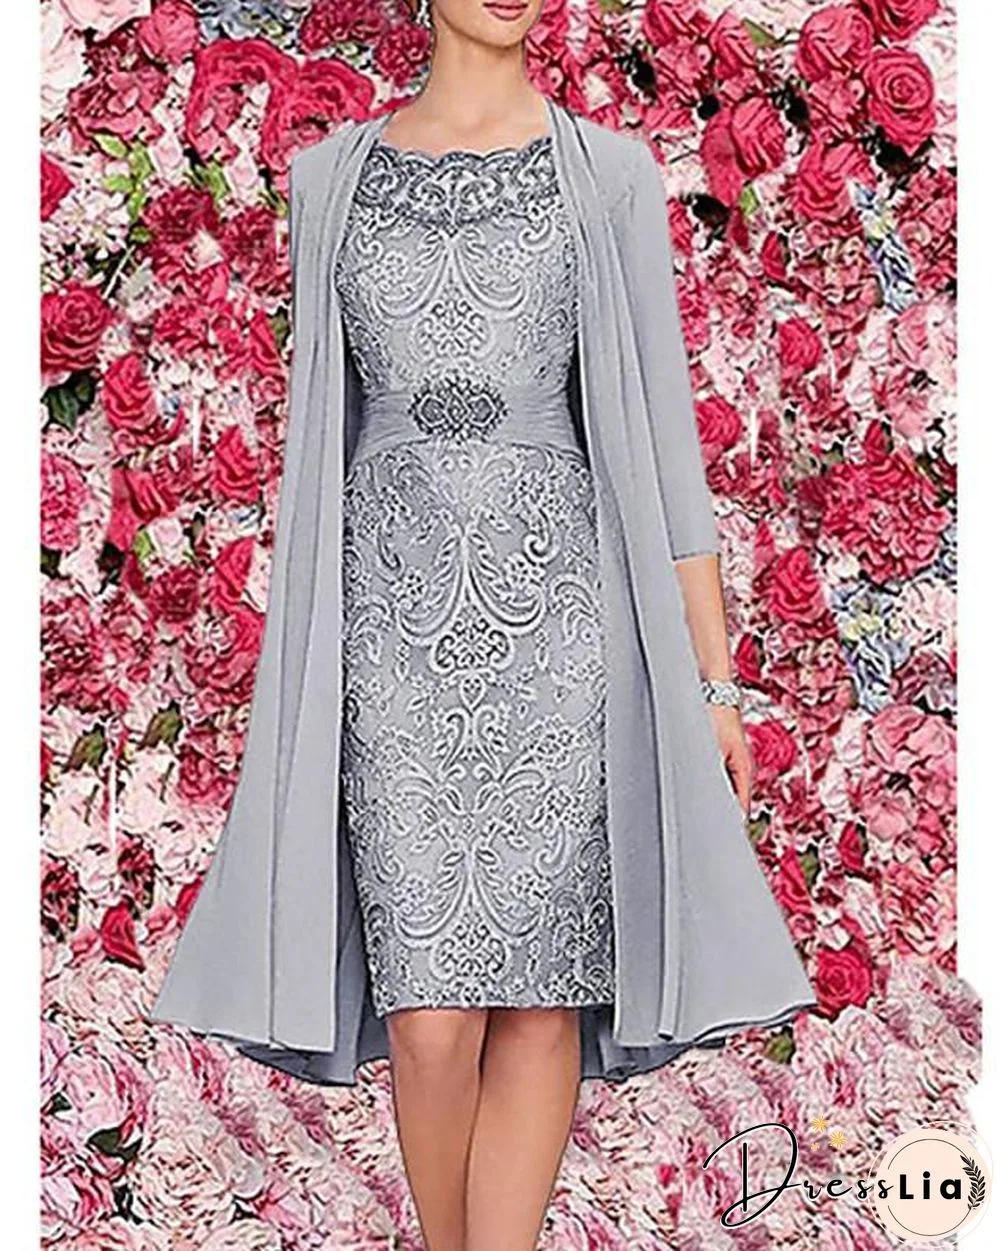 Women's Two Piece Dress Knee Length Dress 3/4 Length Sleeve Floral Jacquard Spring & Summer Hot Elegant Wine Dark Blue Gray M L XL XXL 3XL